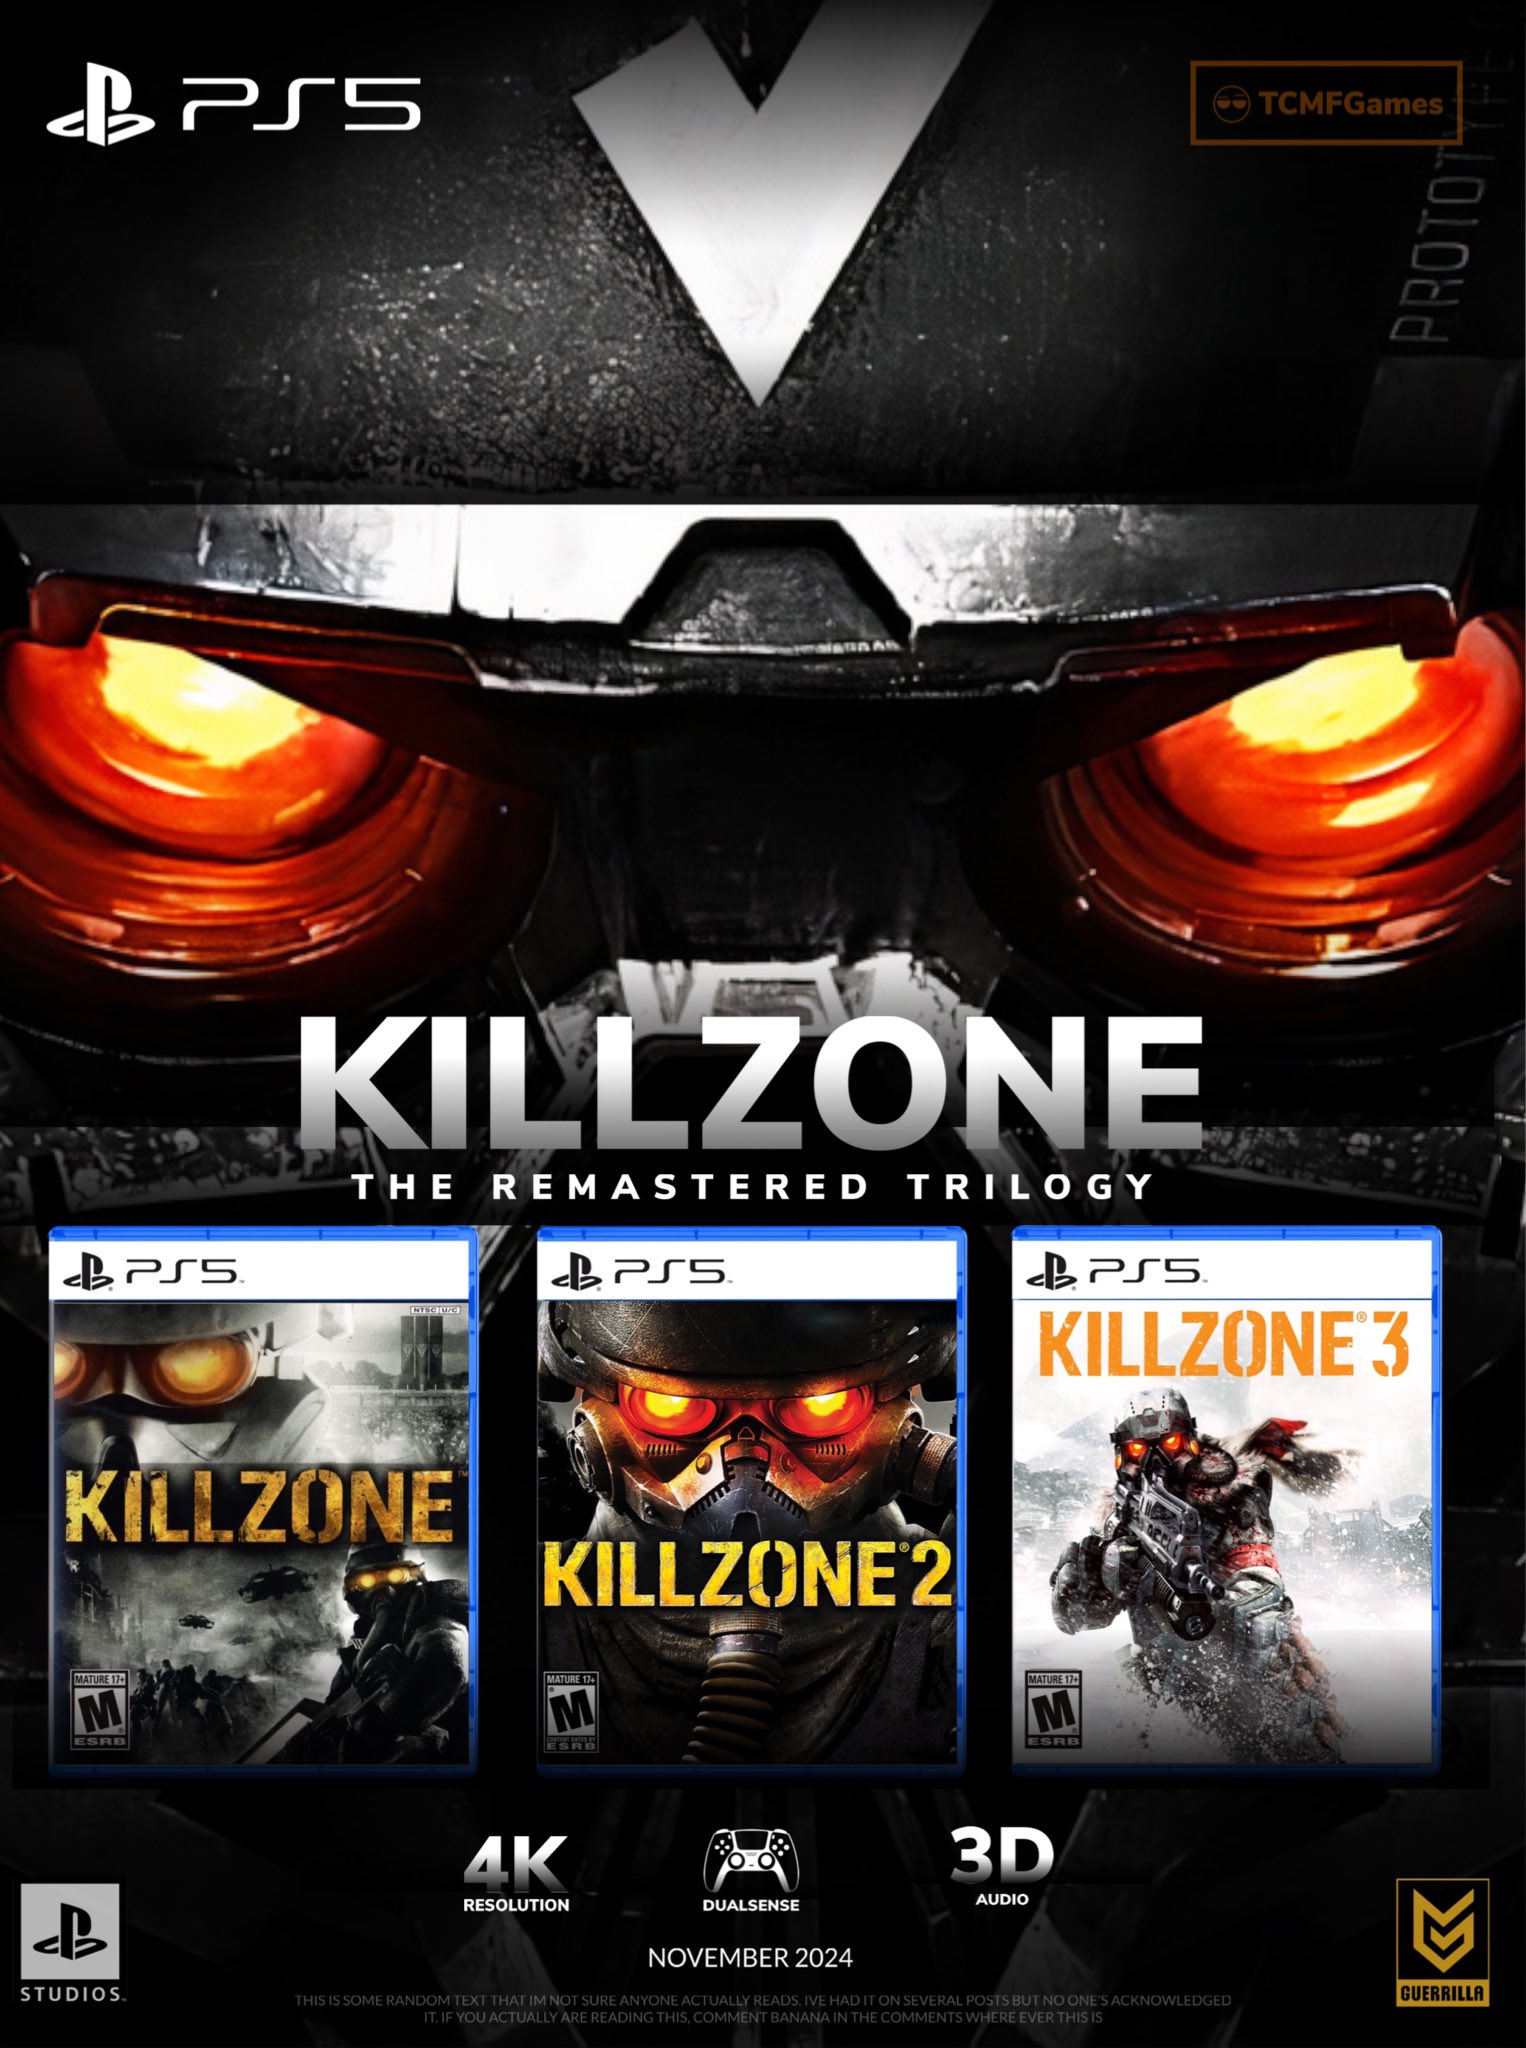 TCMFGames on X: Killzone Remastered Trilogy would be amazing